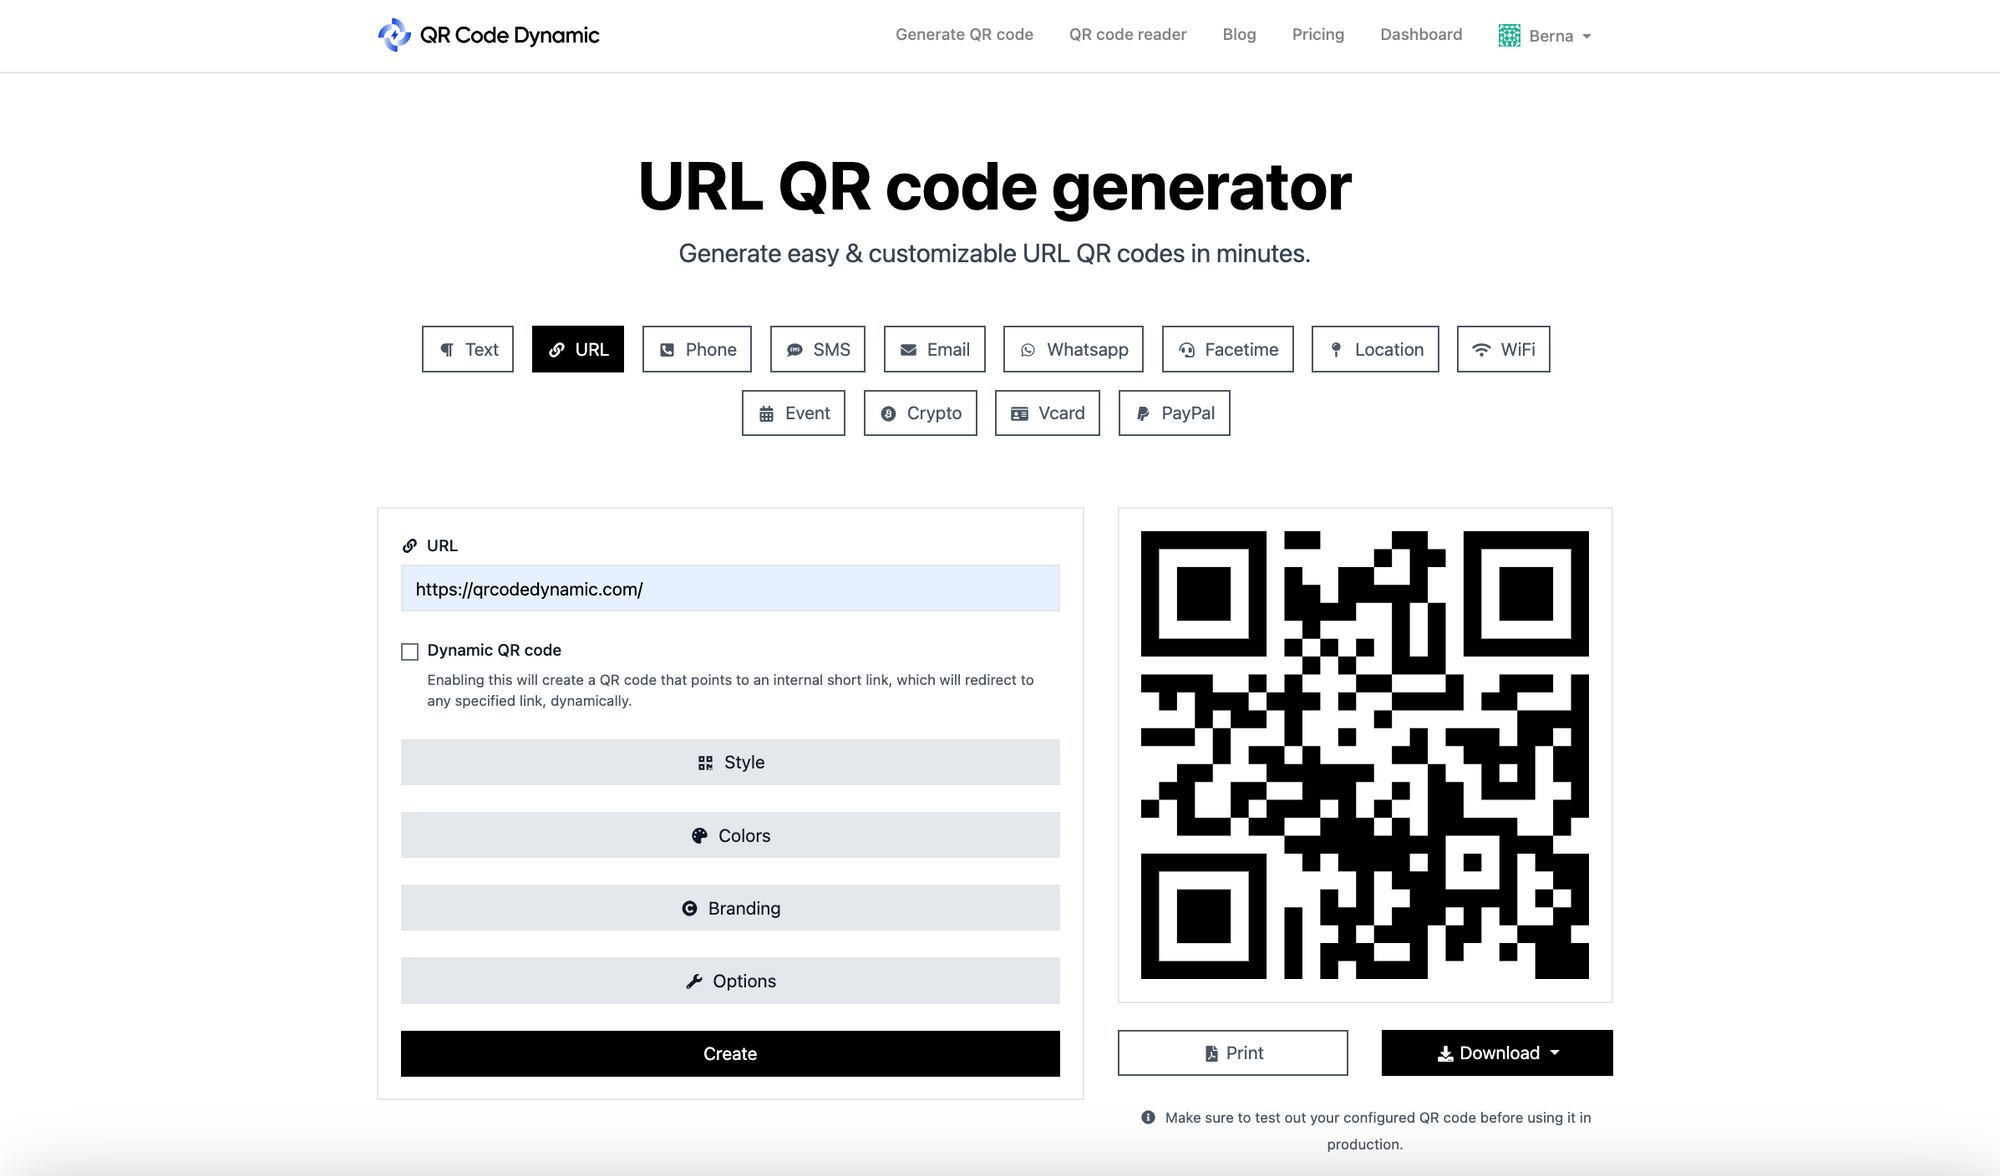 a screenshot of QRCodeDynamic's URL QR code generator page